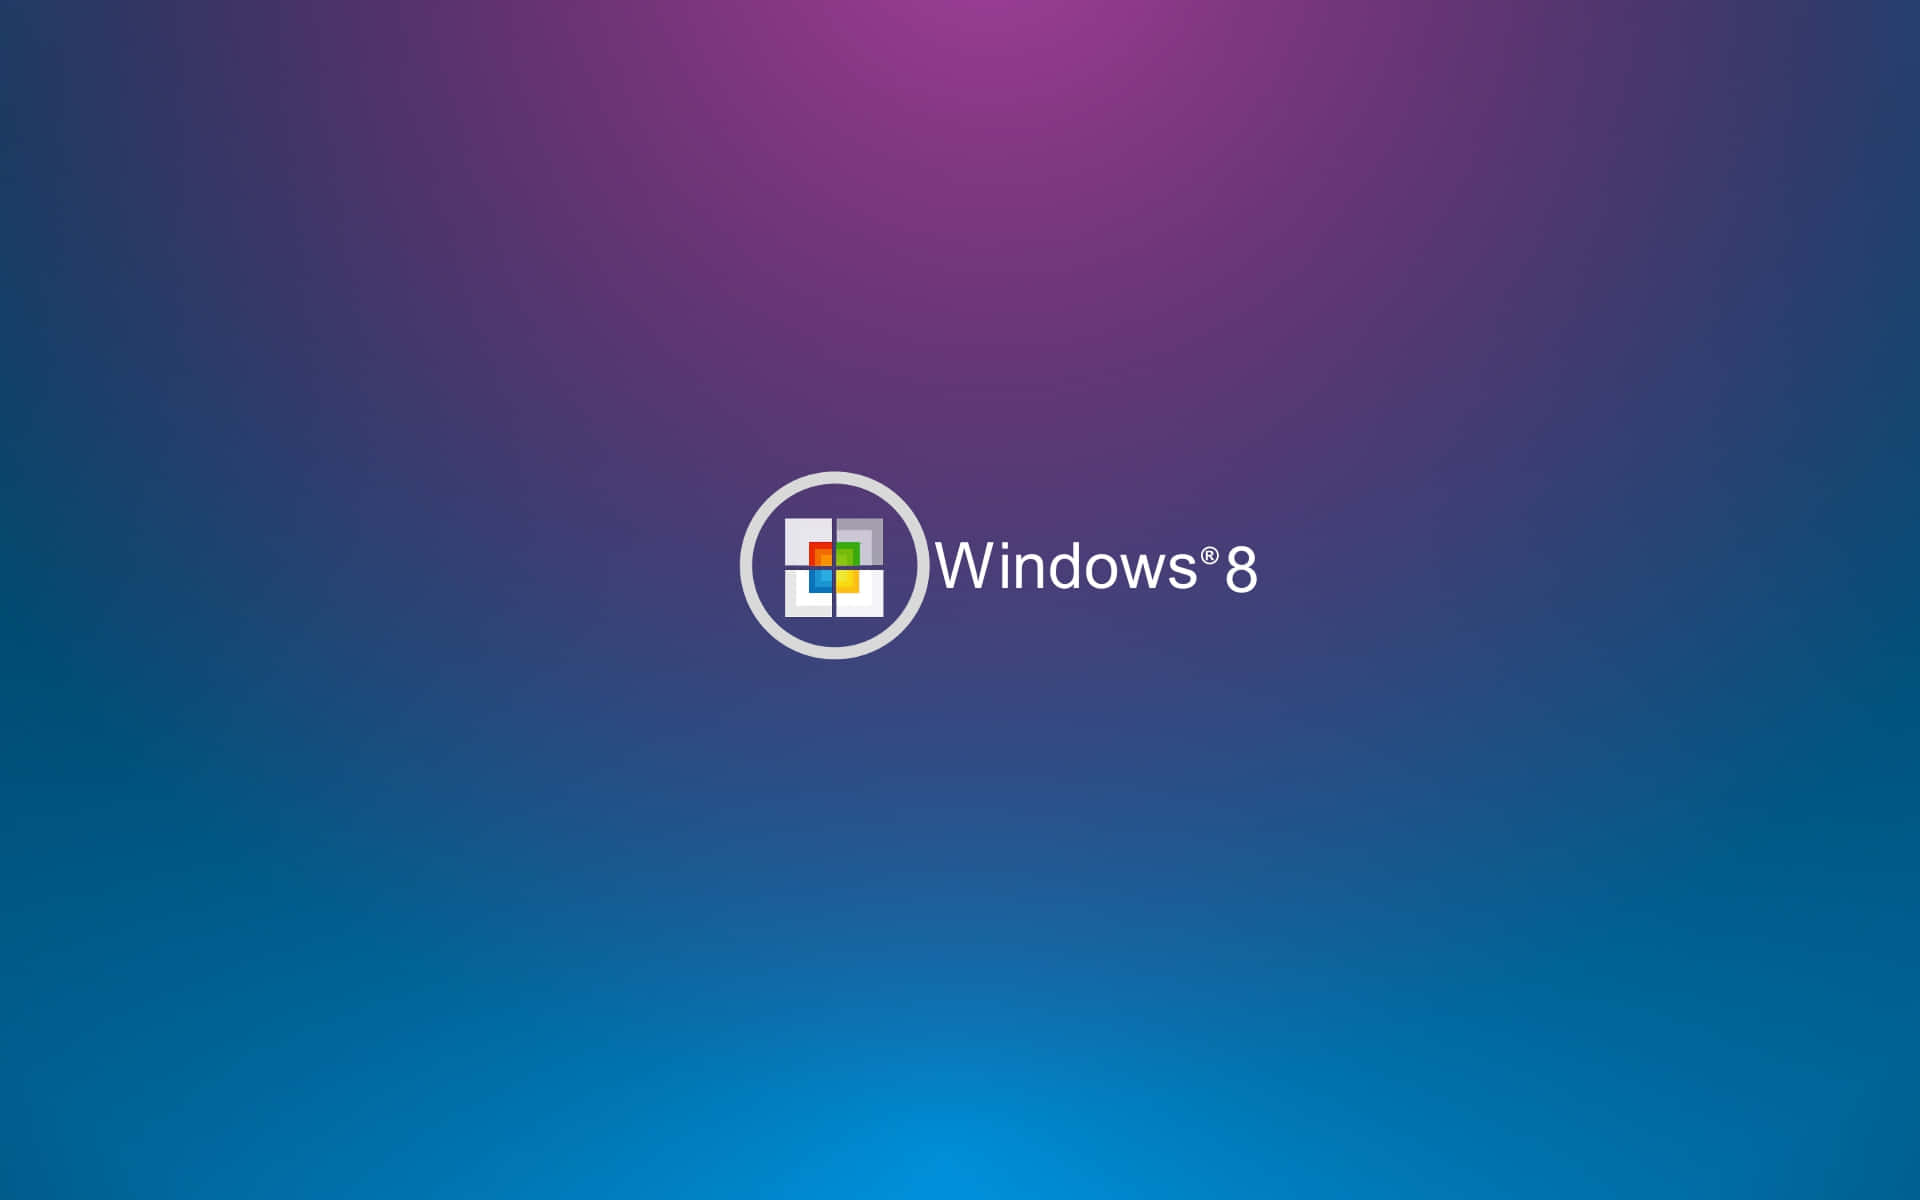 Windows8 Baggrund I Størrelsen 1920 X 1200